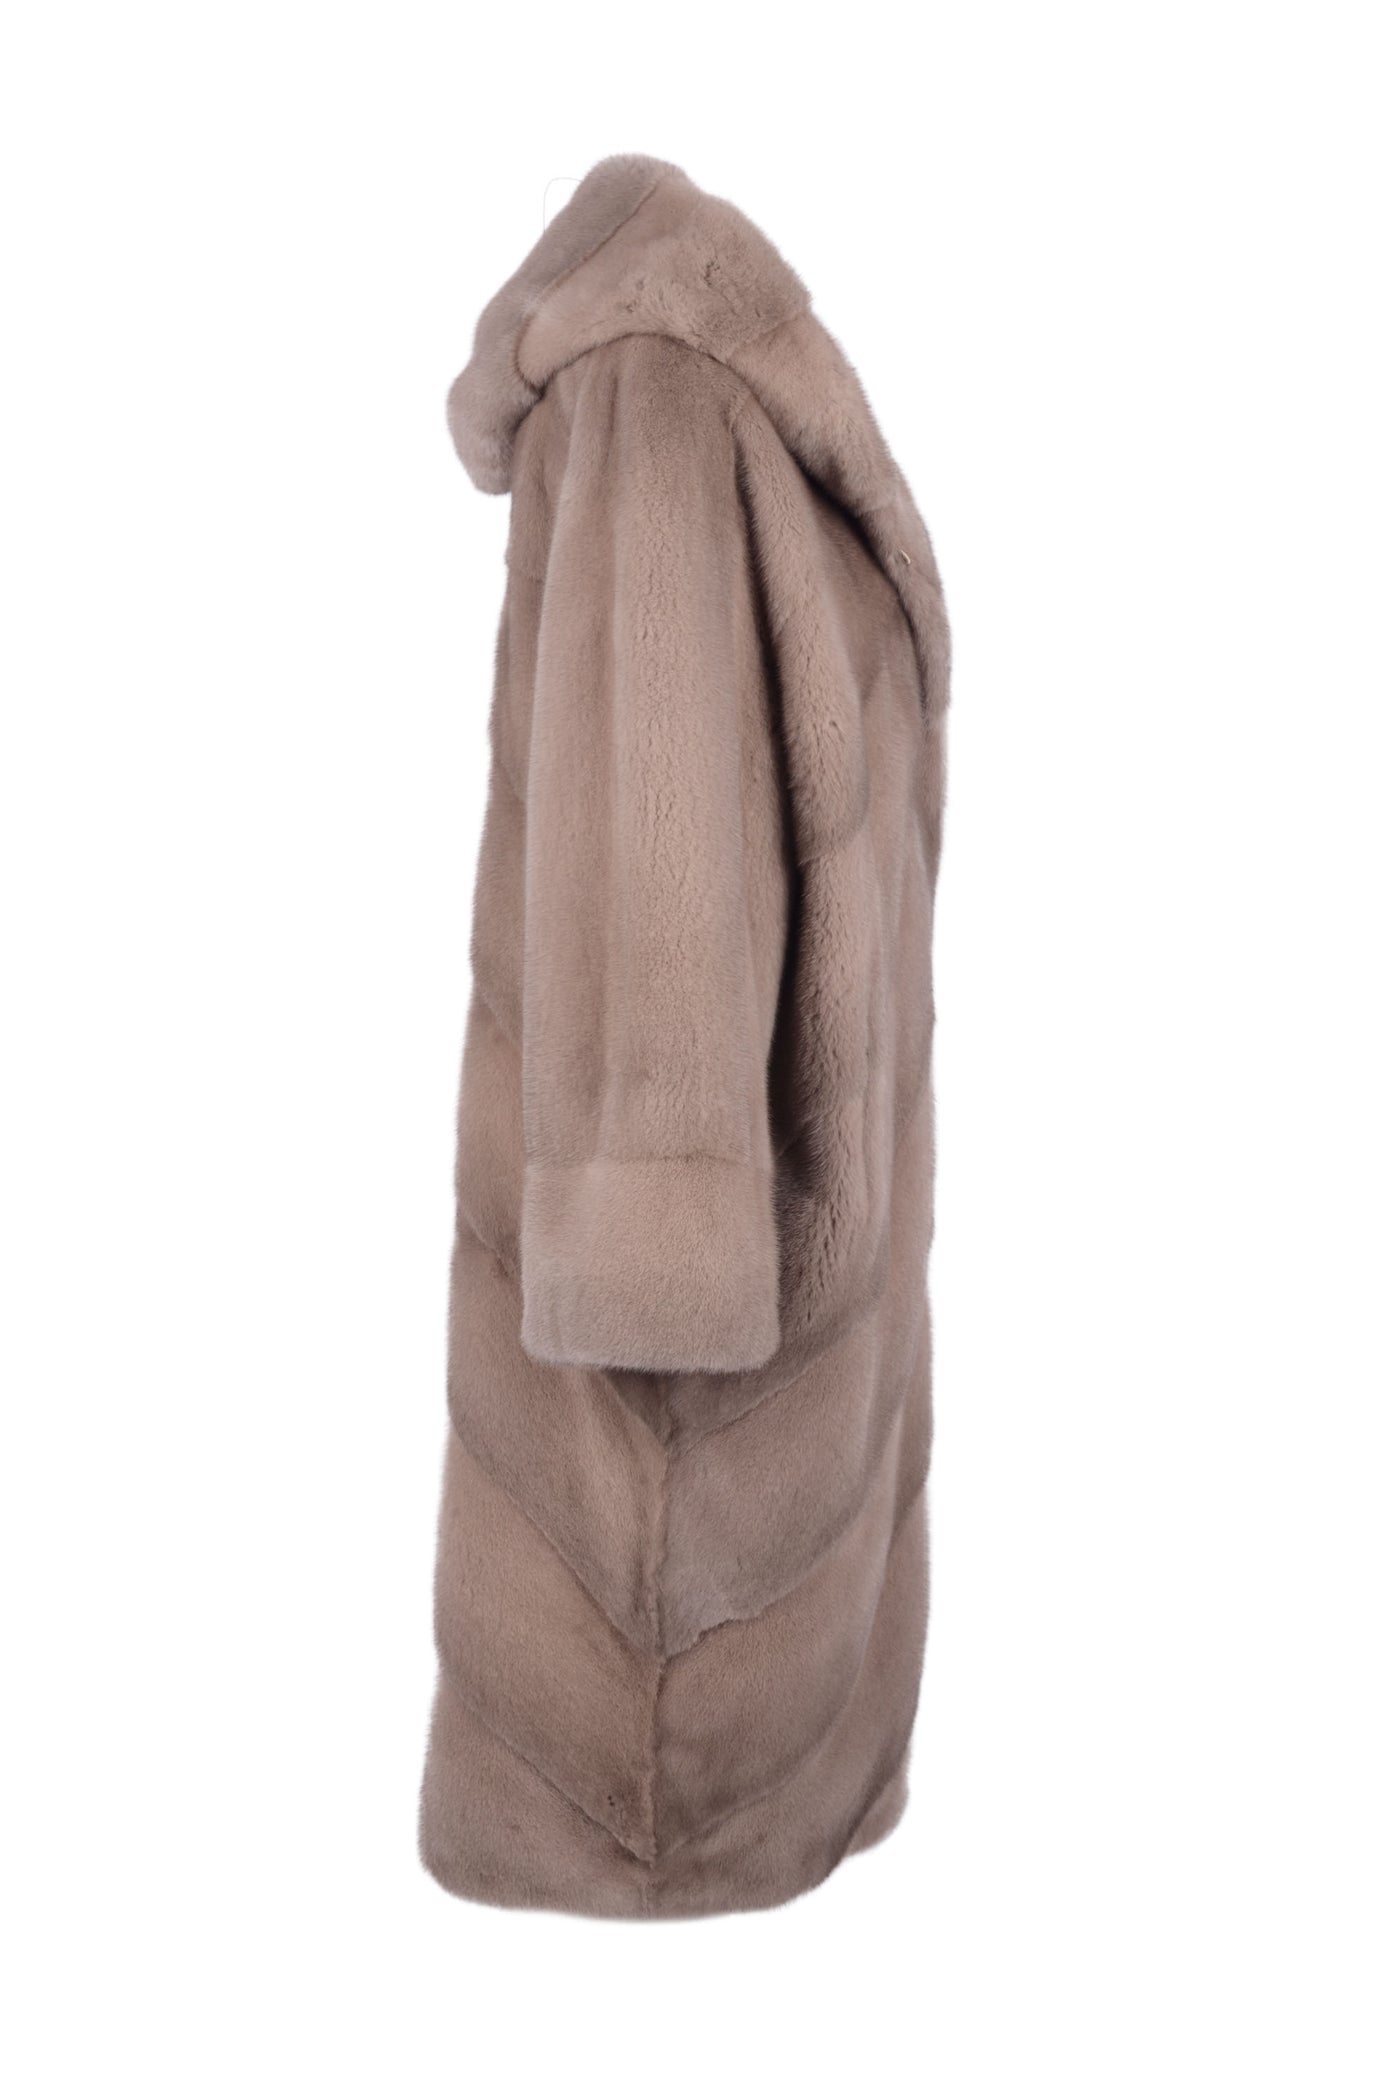 Long classy hooded mink coat